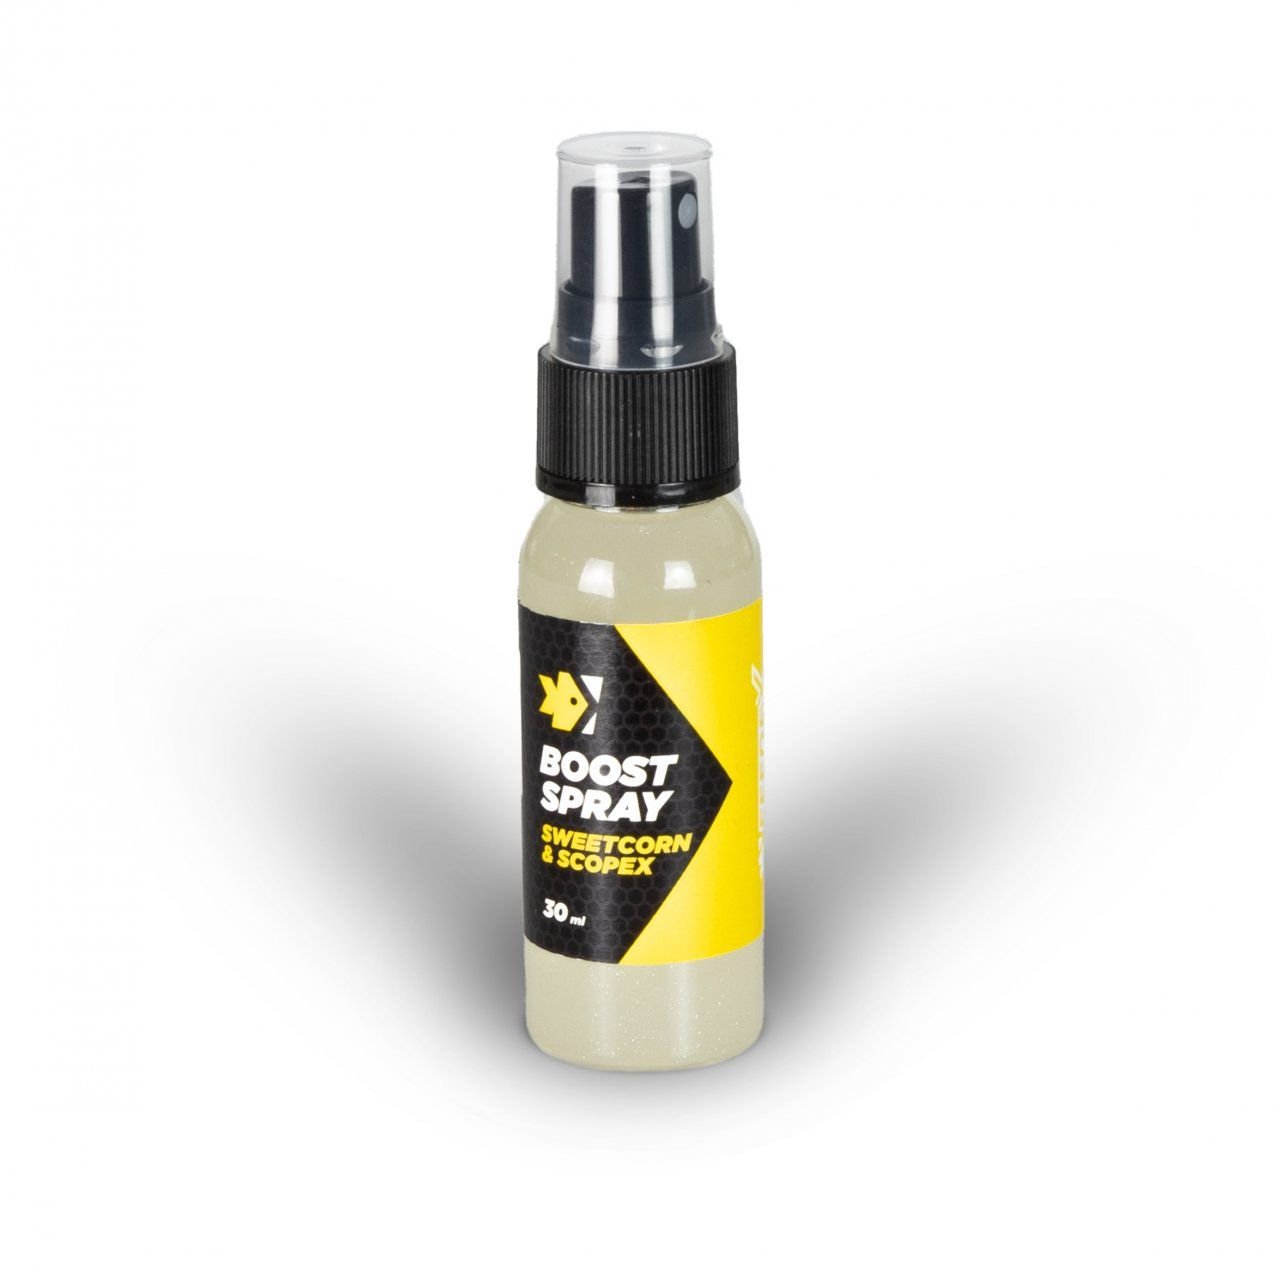 Feeder Expert Boost Spray 30ml Sweetcorn&Scopex